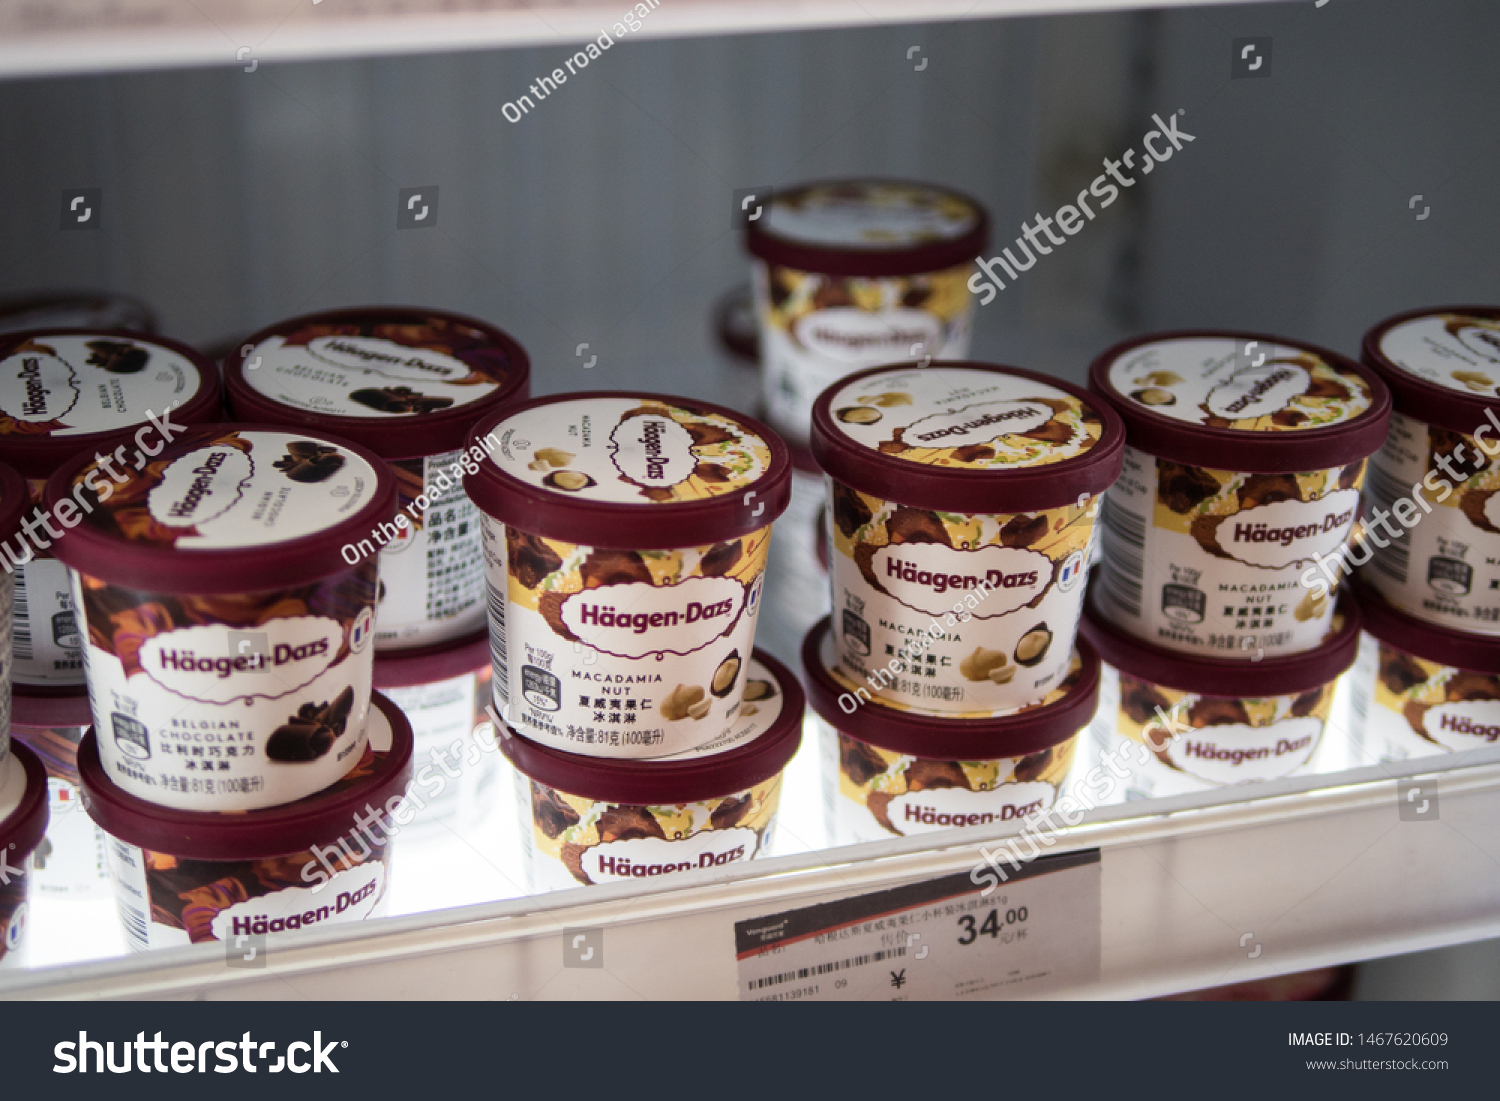 China Ice Cream Products Chinese Supermarket Stock Photo Edit Now